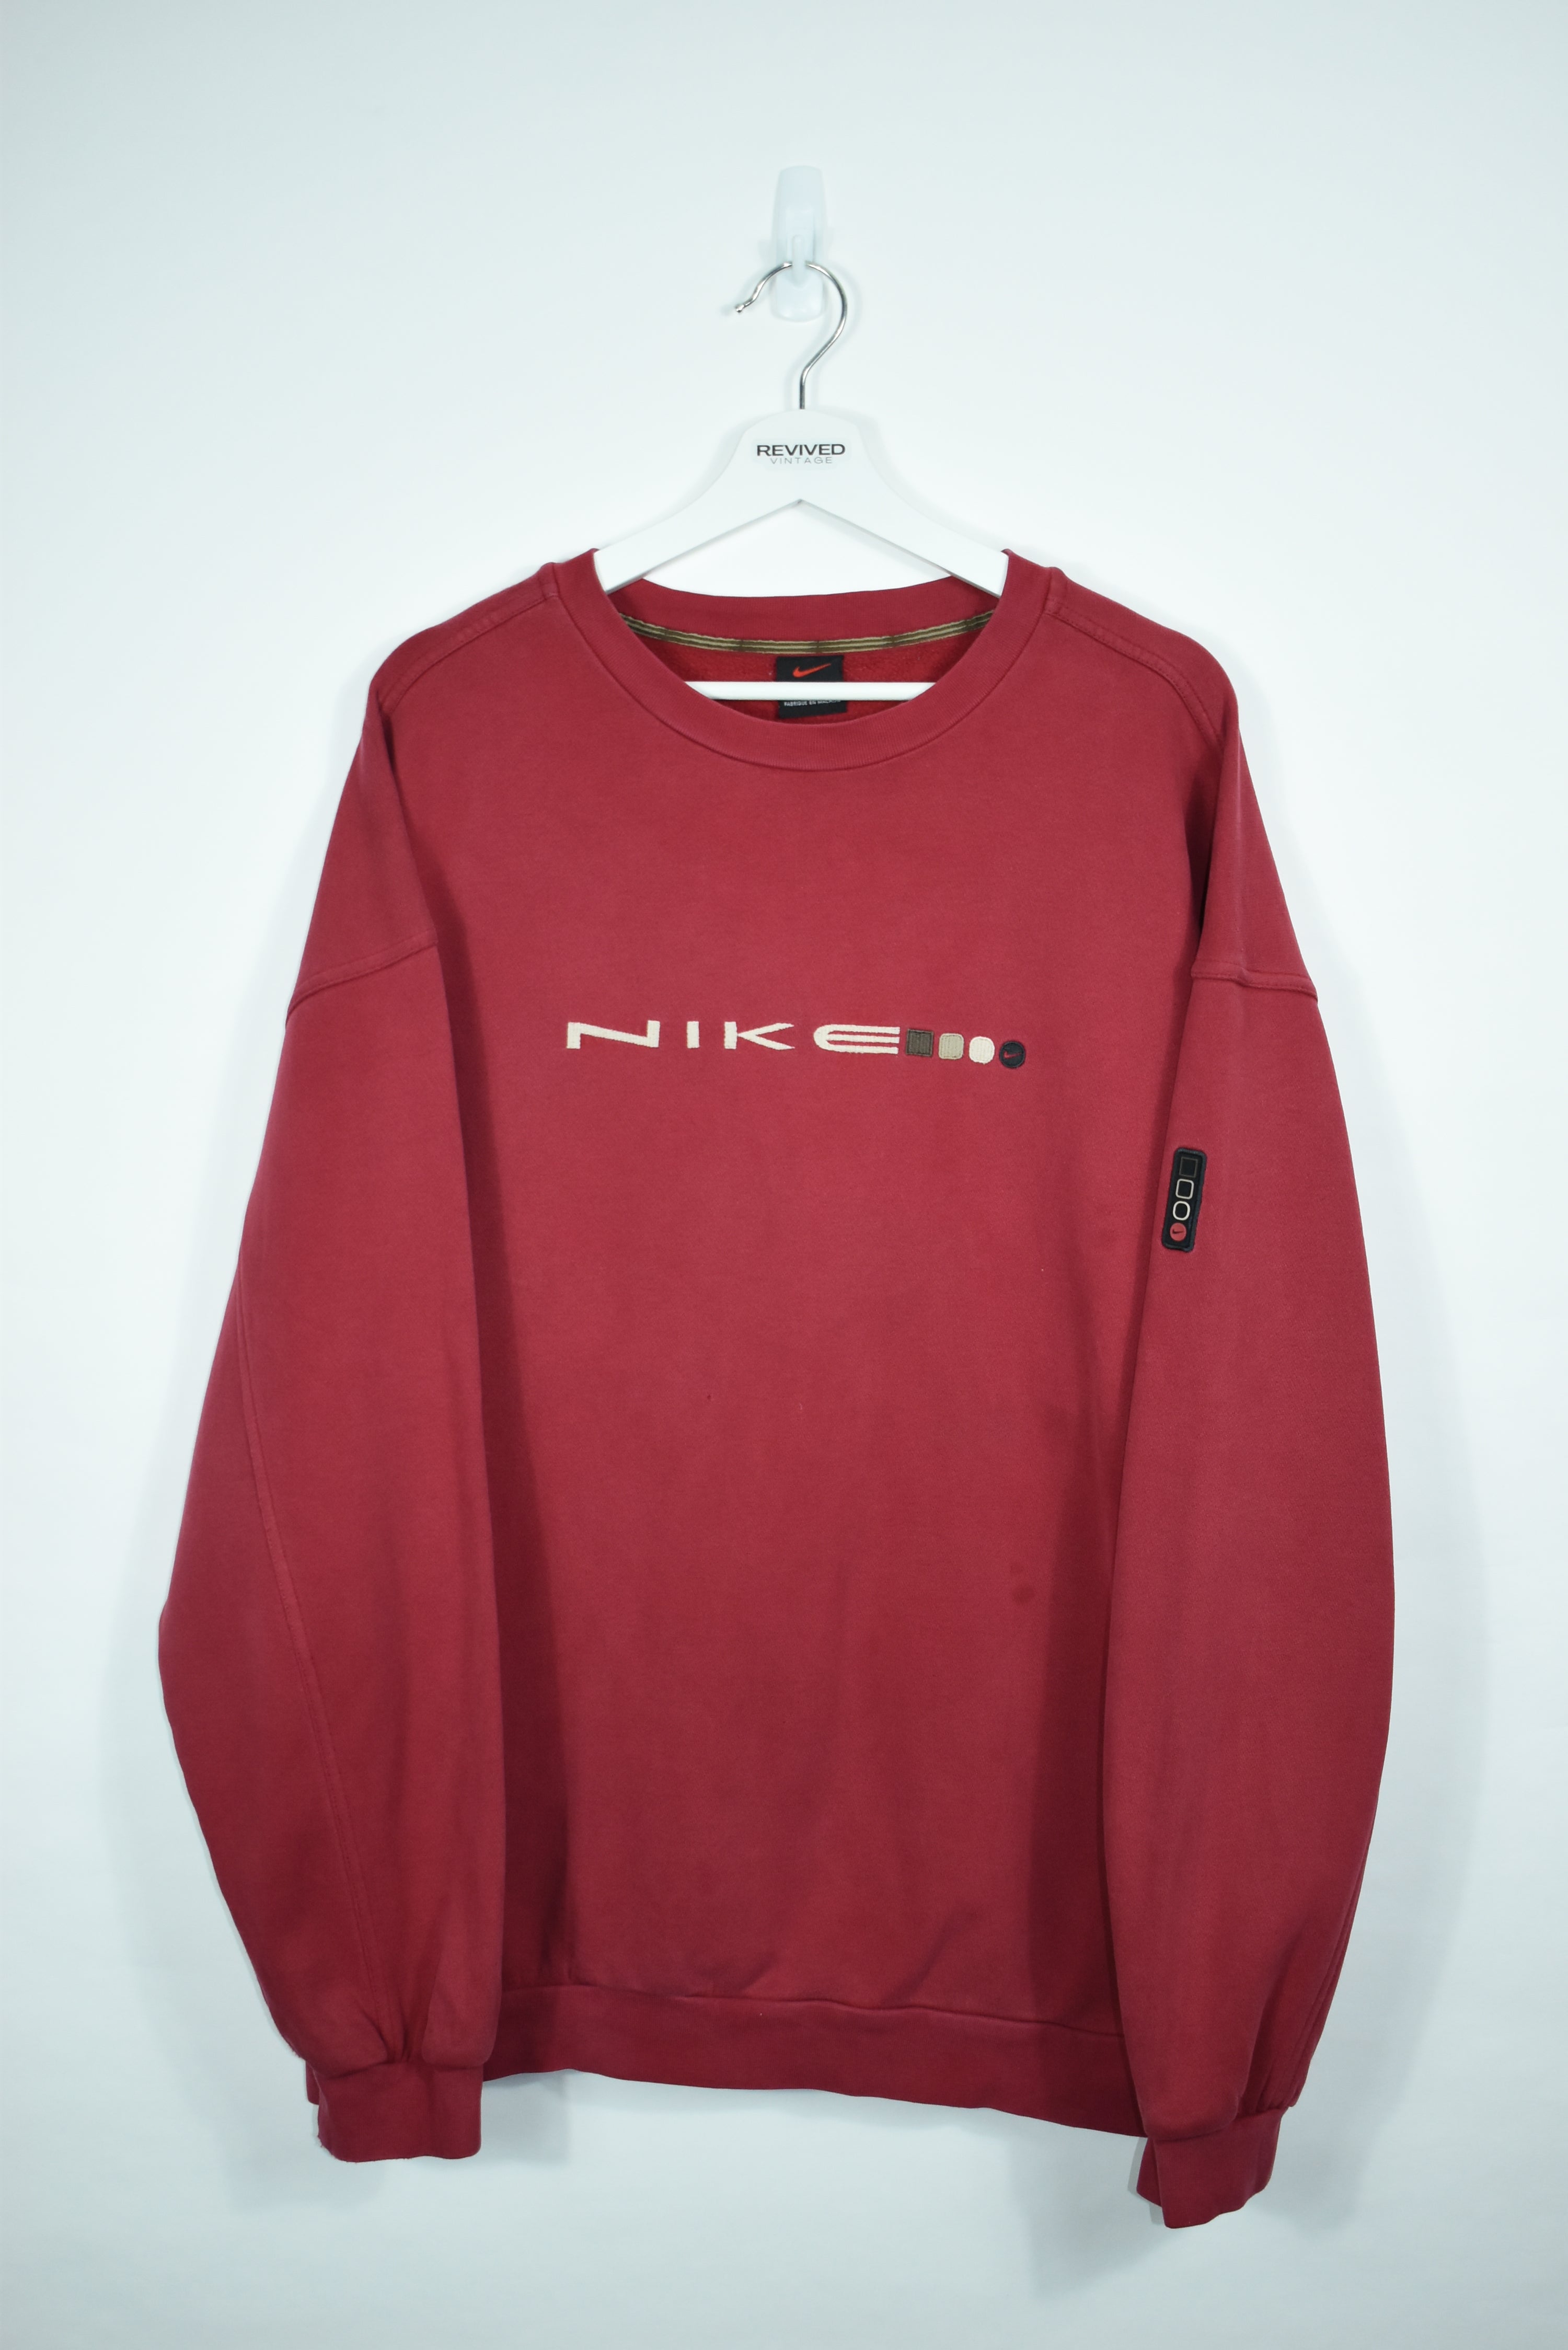 Vintage Nike Embroidery Spellout Sweatshirt XLARGE